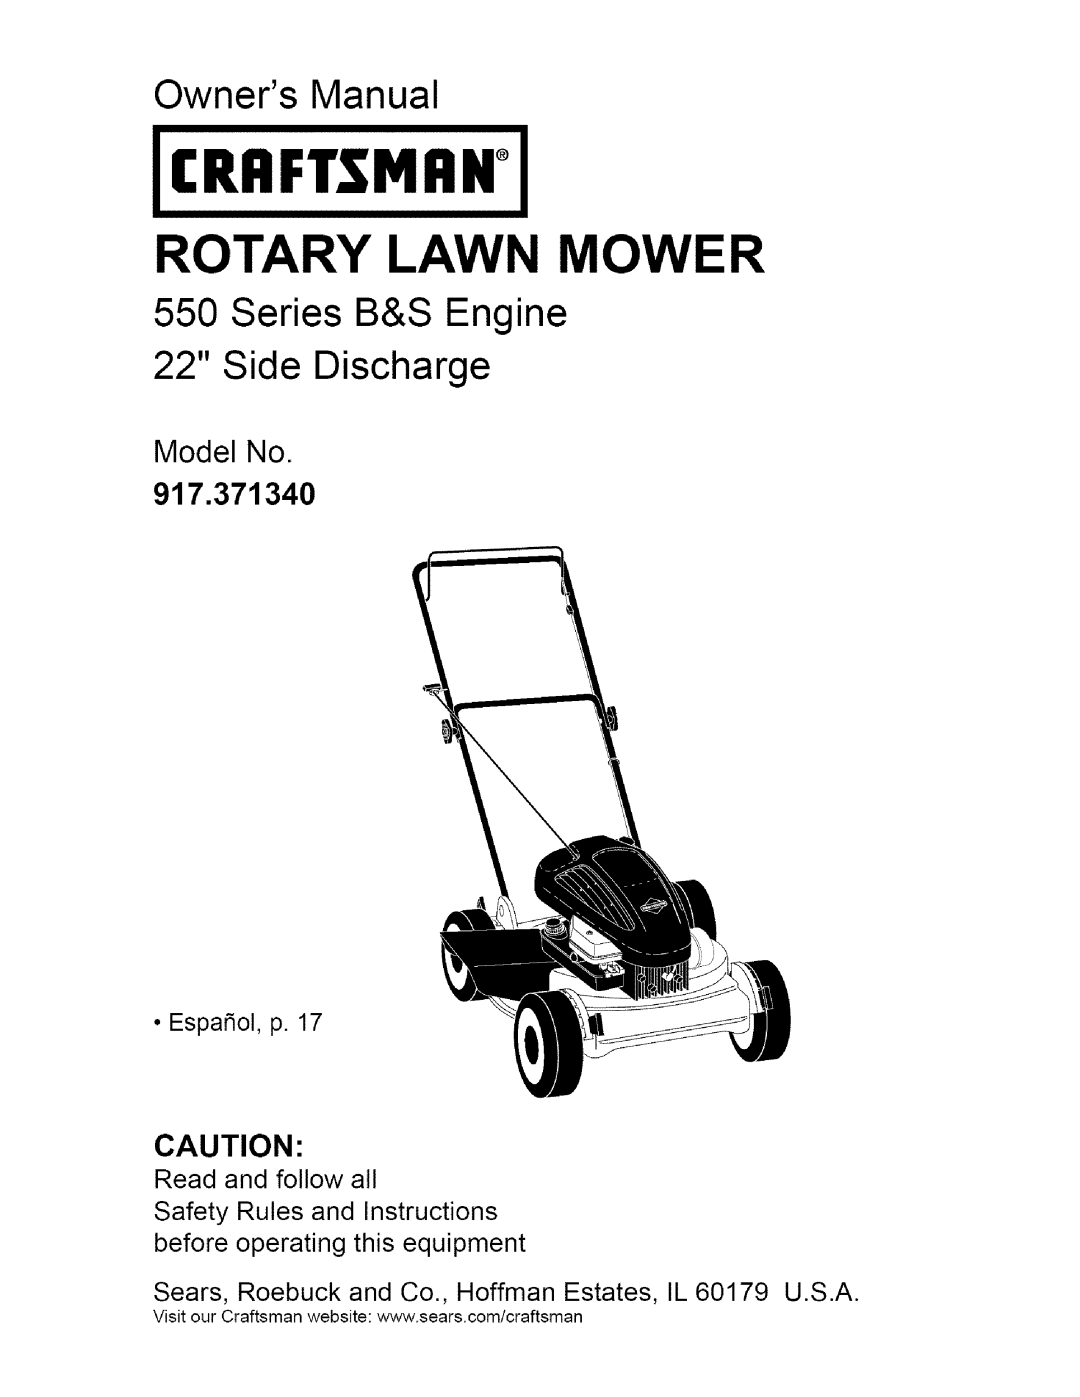 Craftsman 917.37134 owner manual Owners Manual, Series B&S Engine 22 Side Discharge, Crrftsmrn, Rotary Lawn Mower 